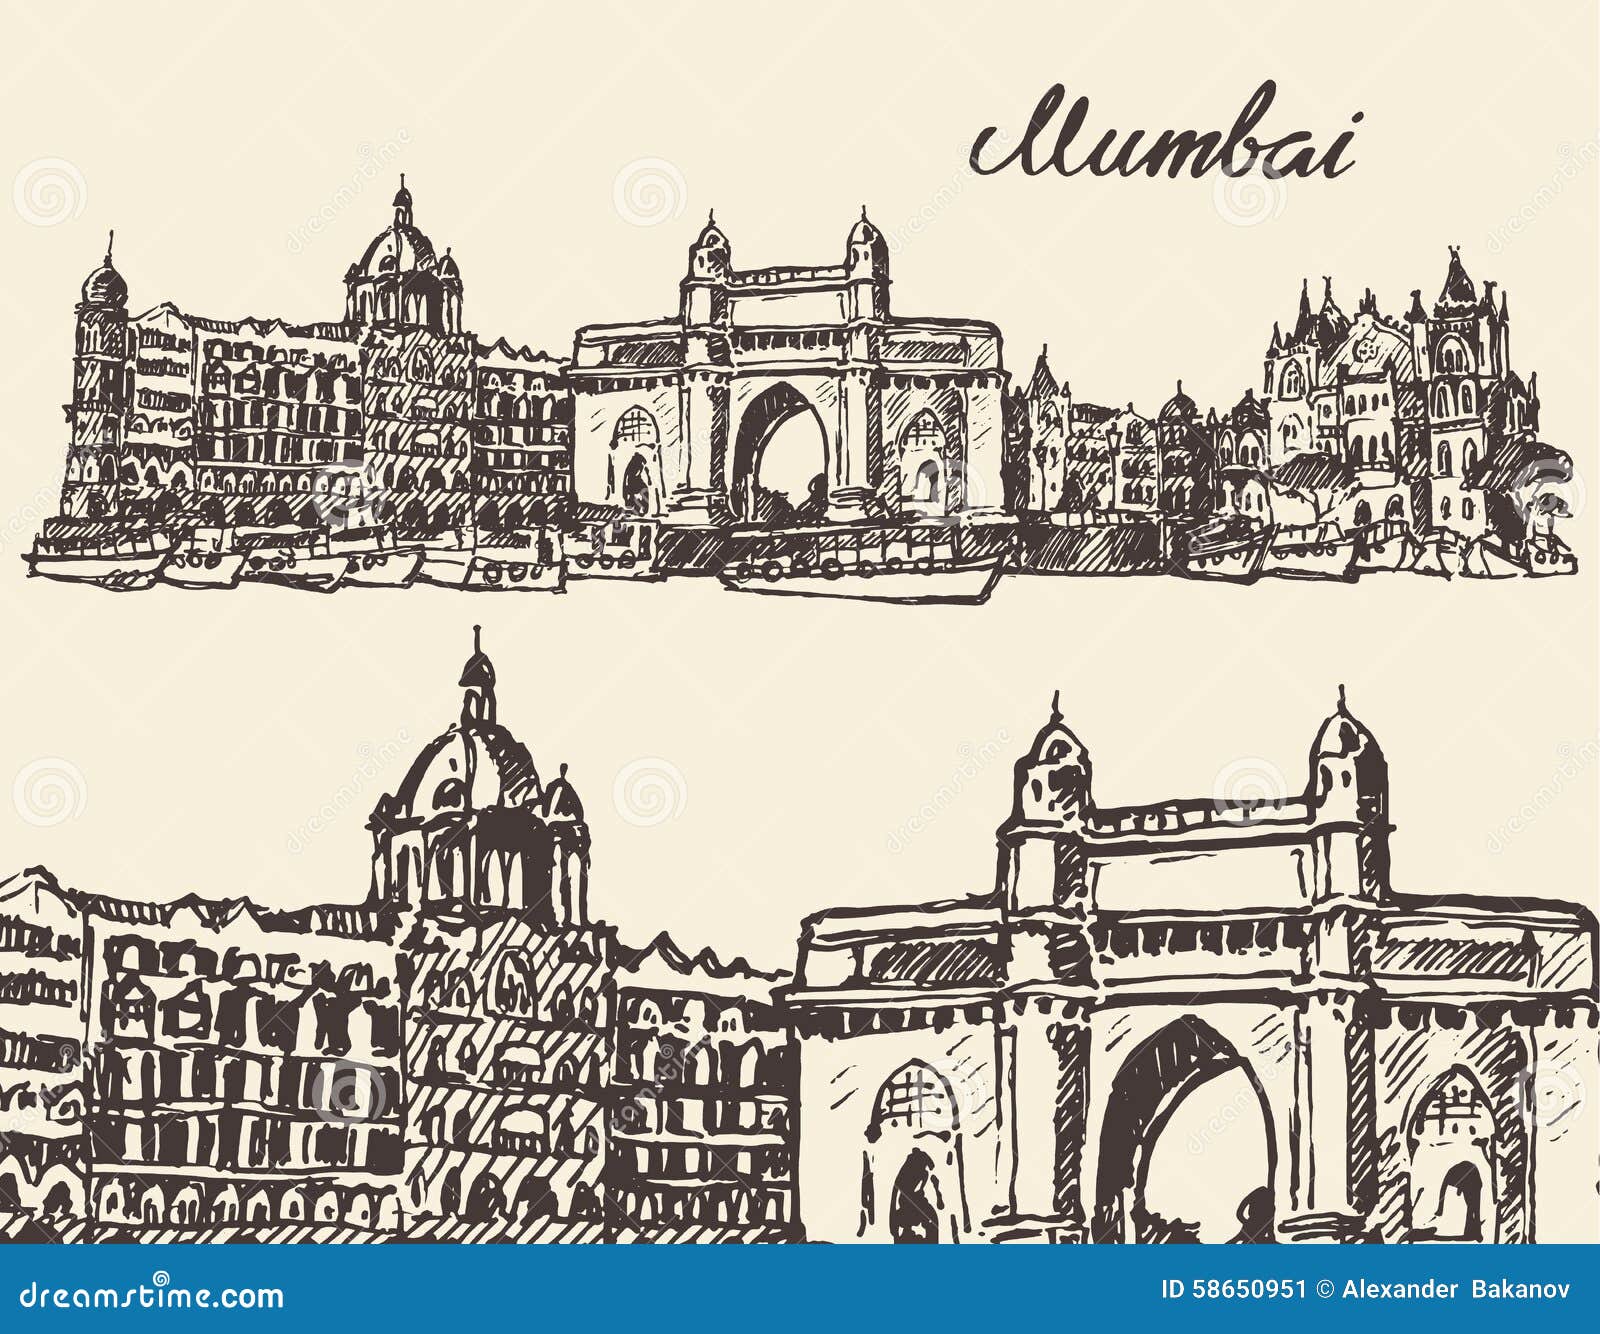 Mumbai Skyline Vector Art & Graphics | freevector.com